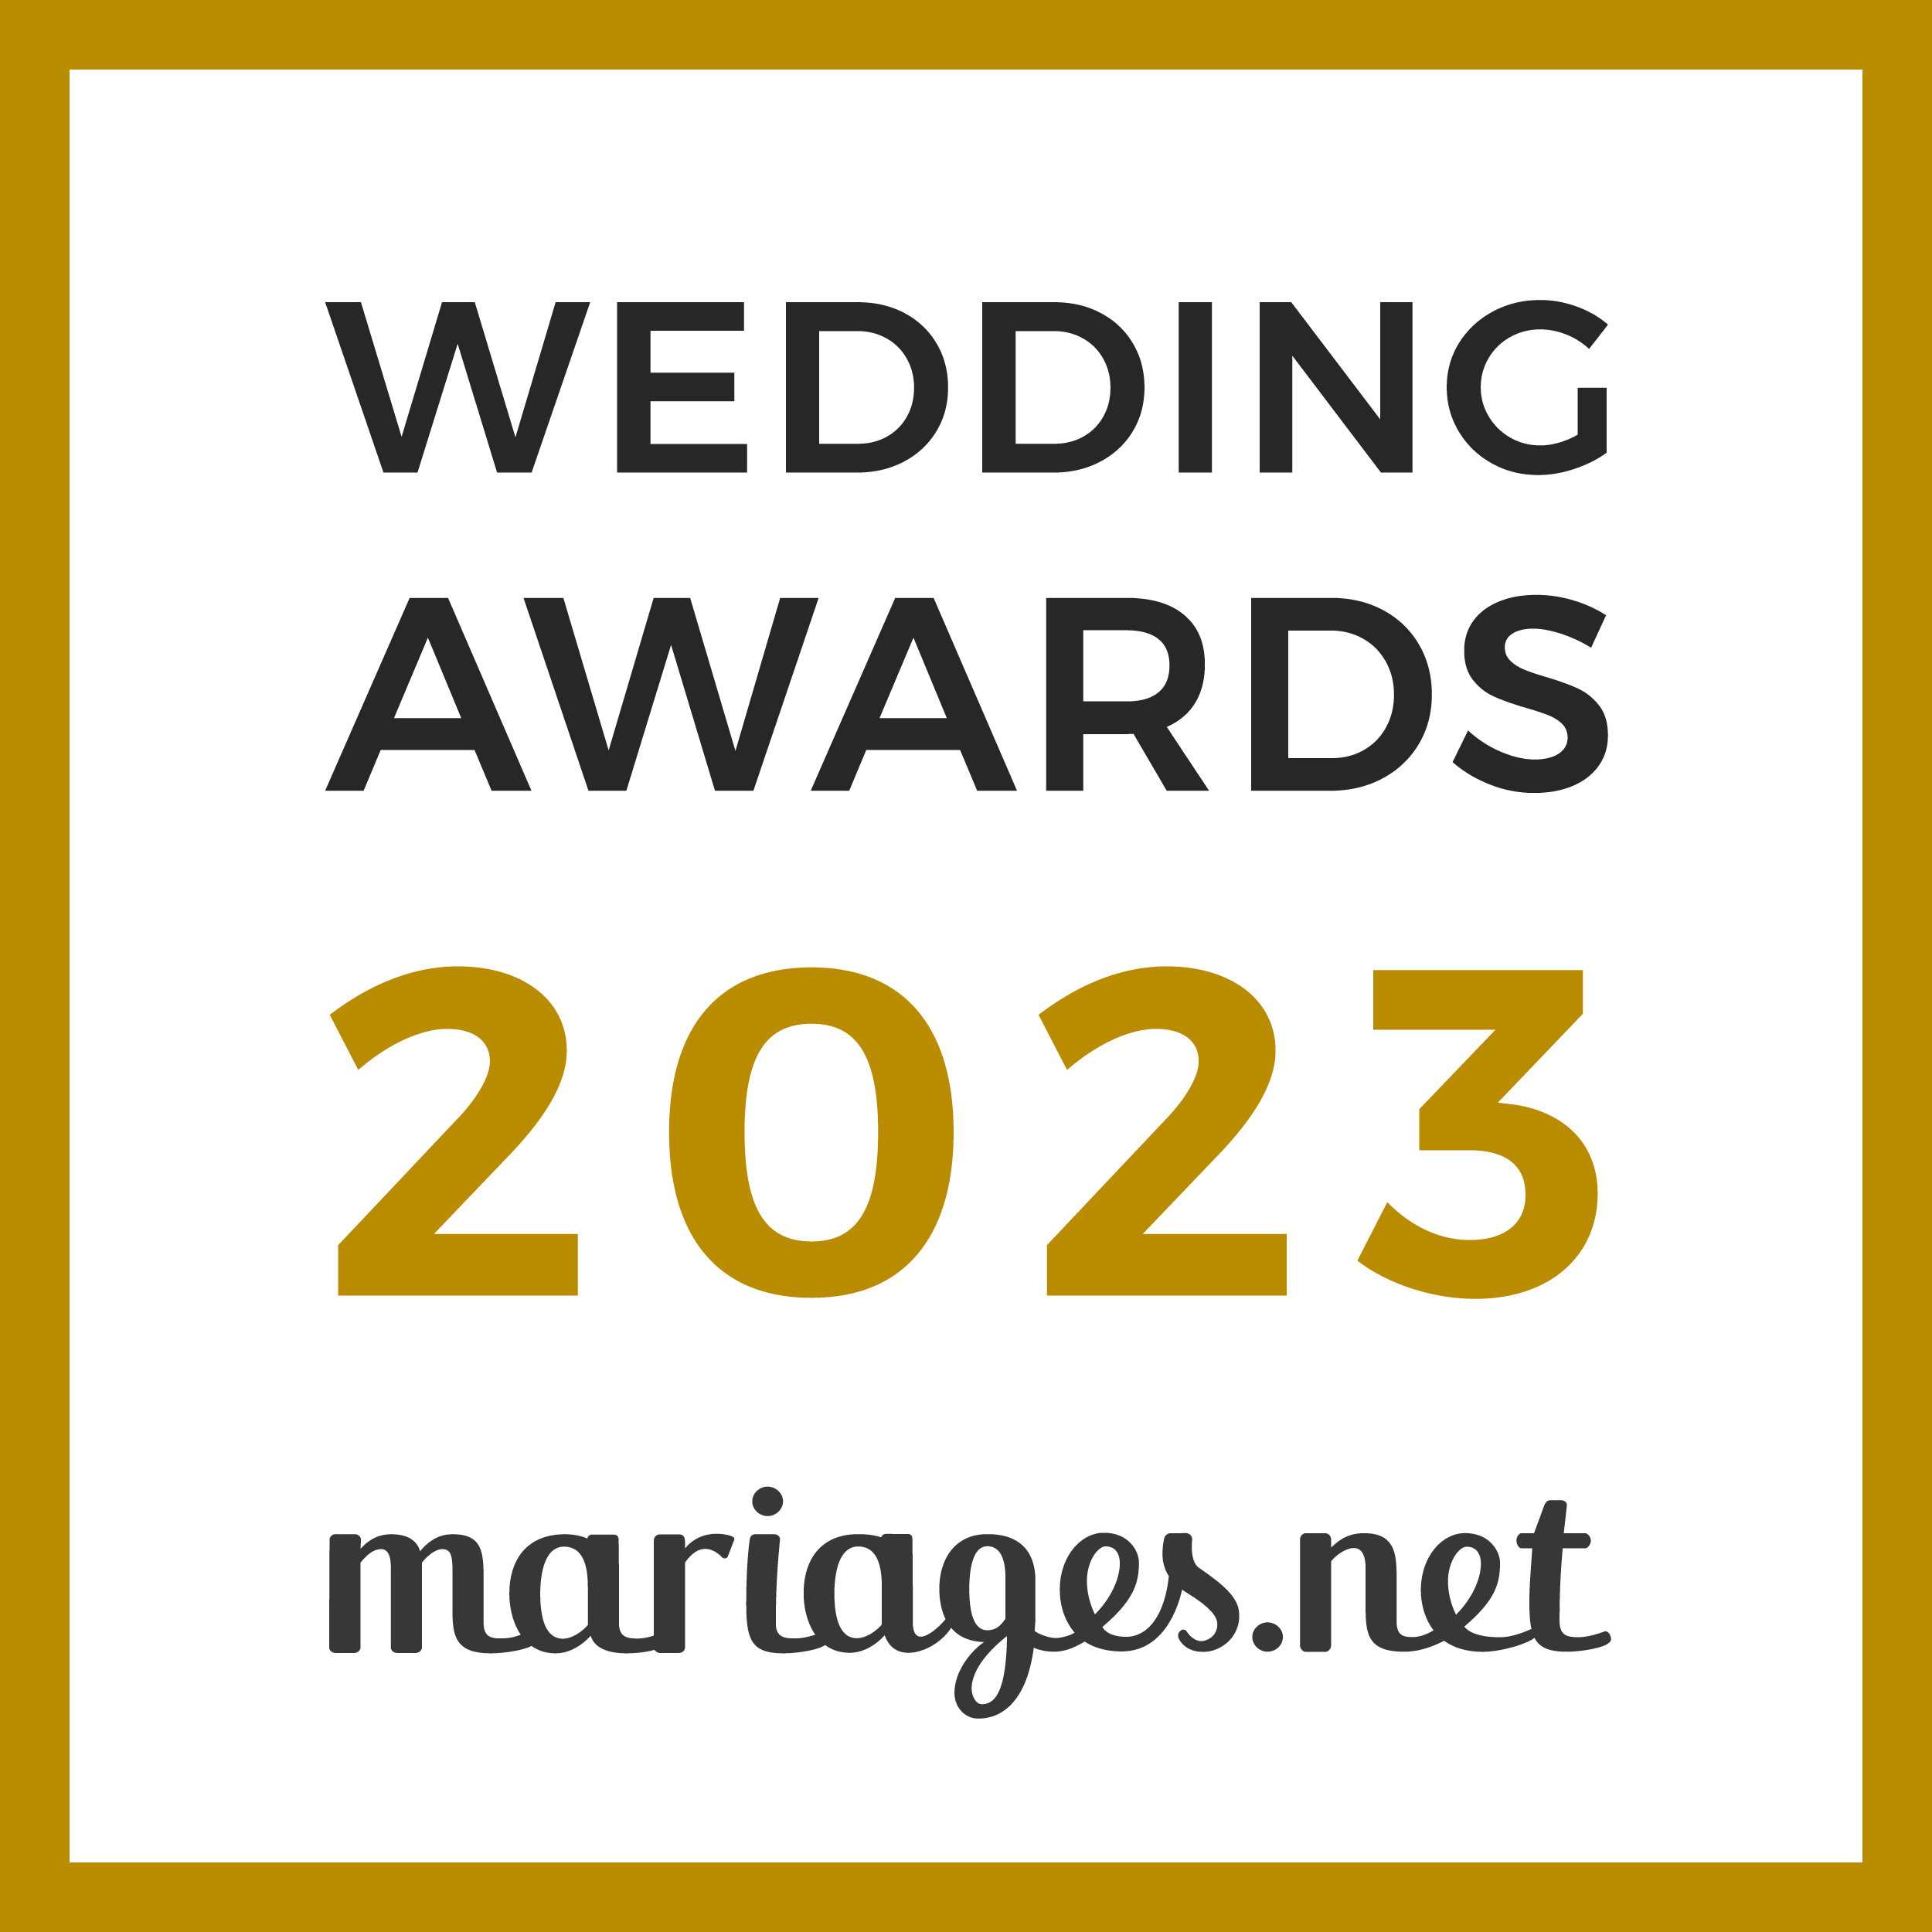 Alexandra Dinca Photographe, gagnant Wedding Awards 2023 Mariages.net